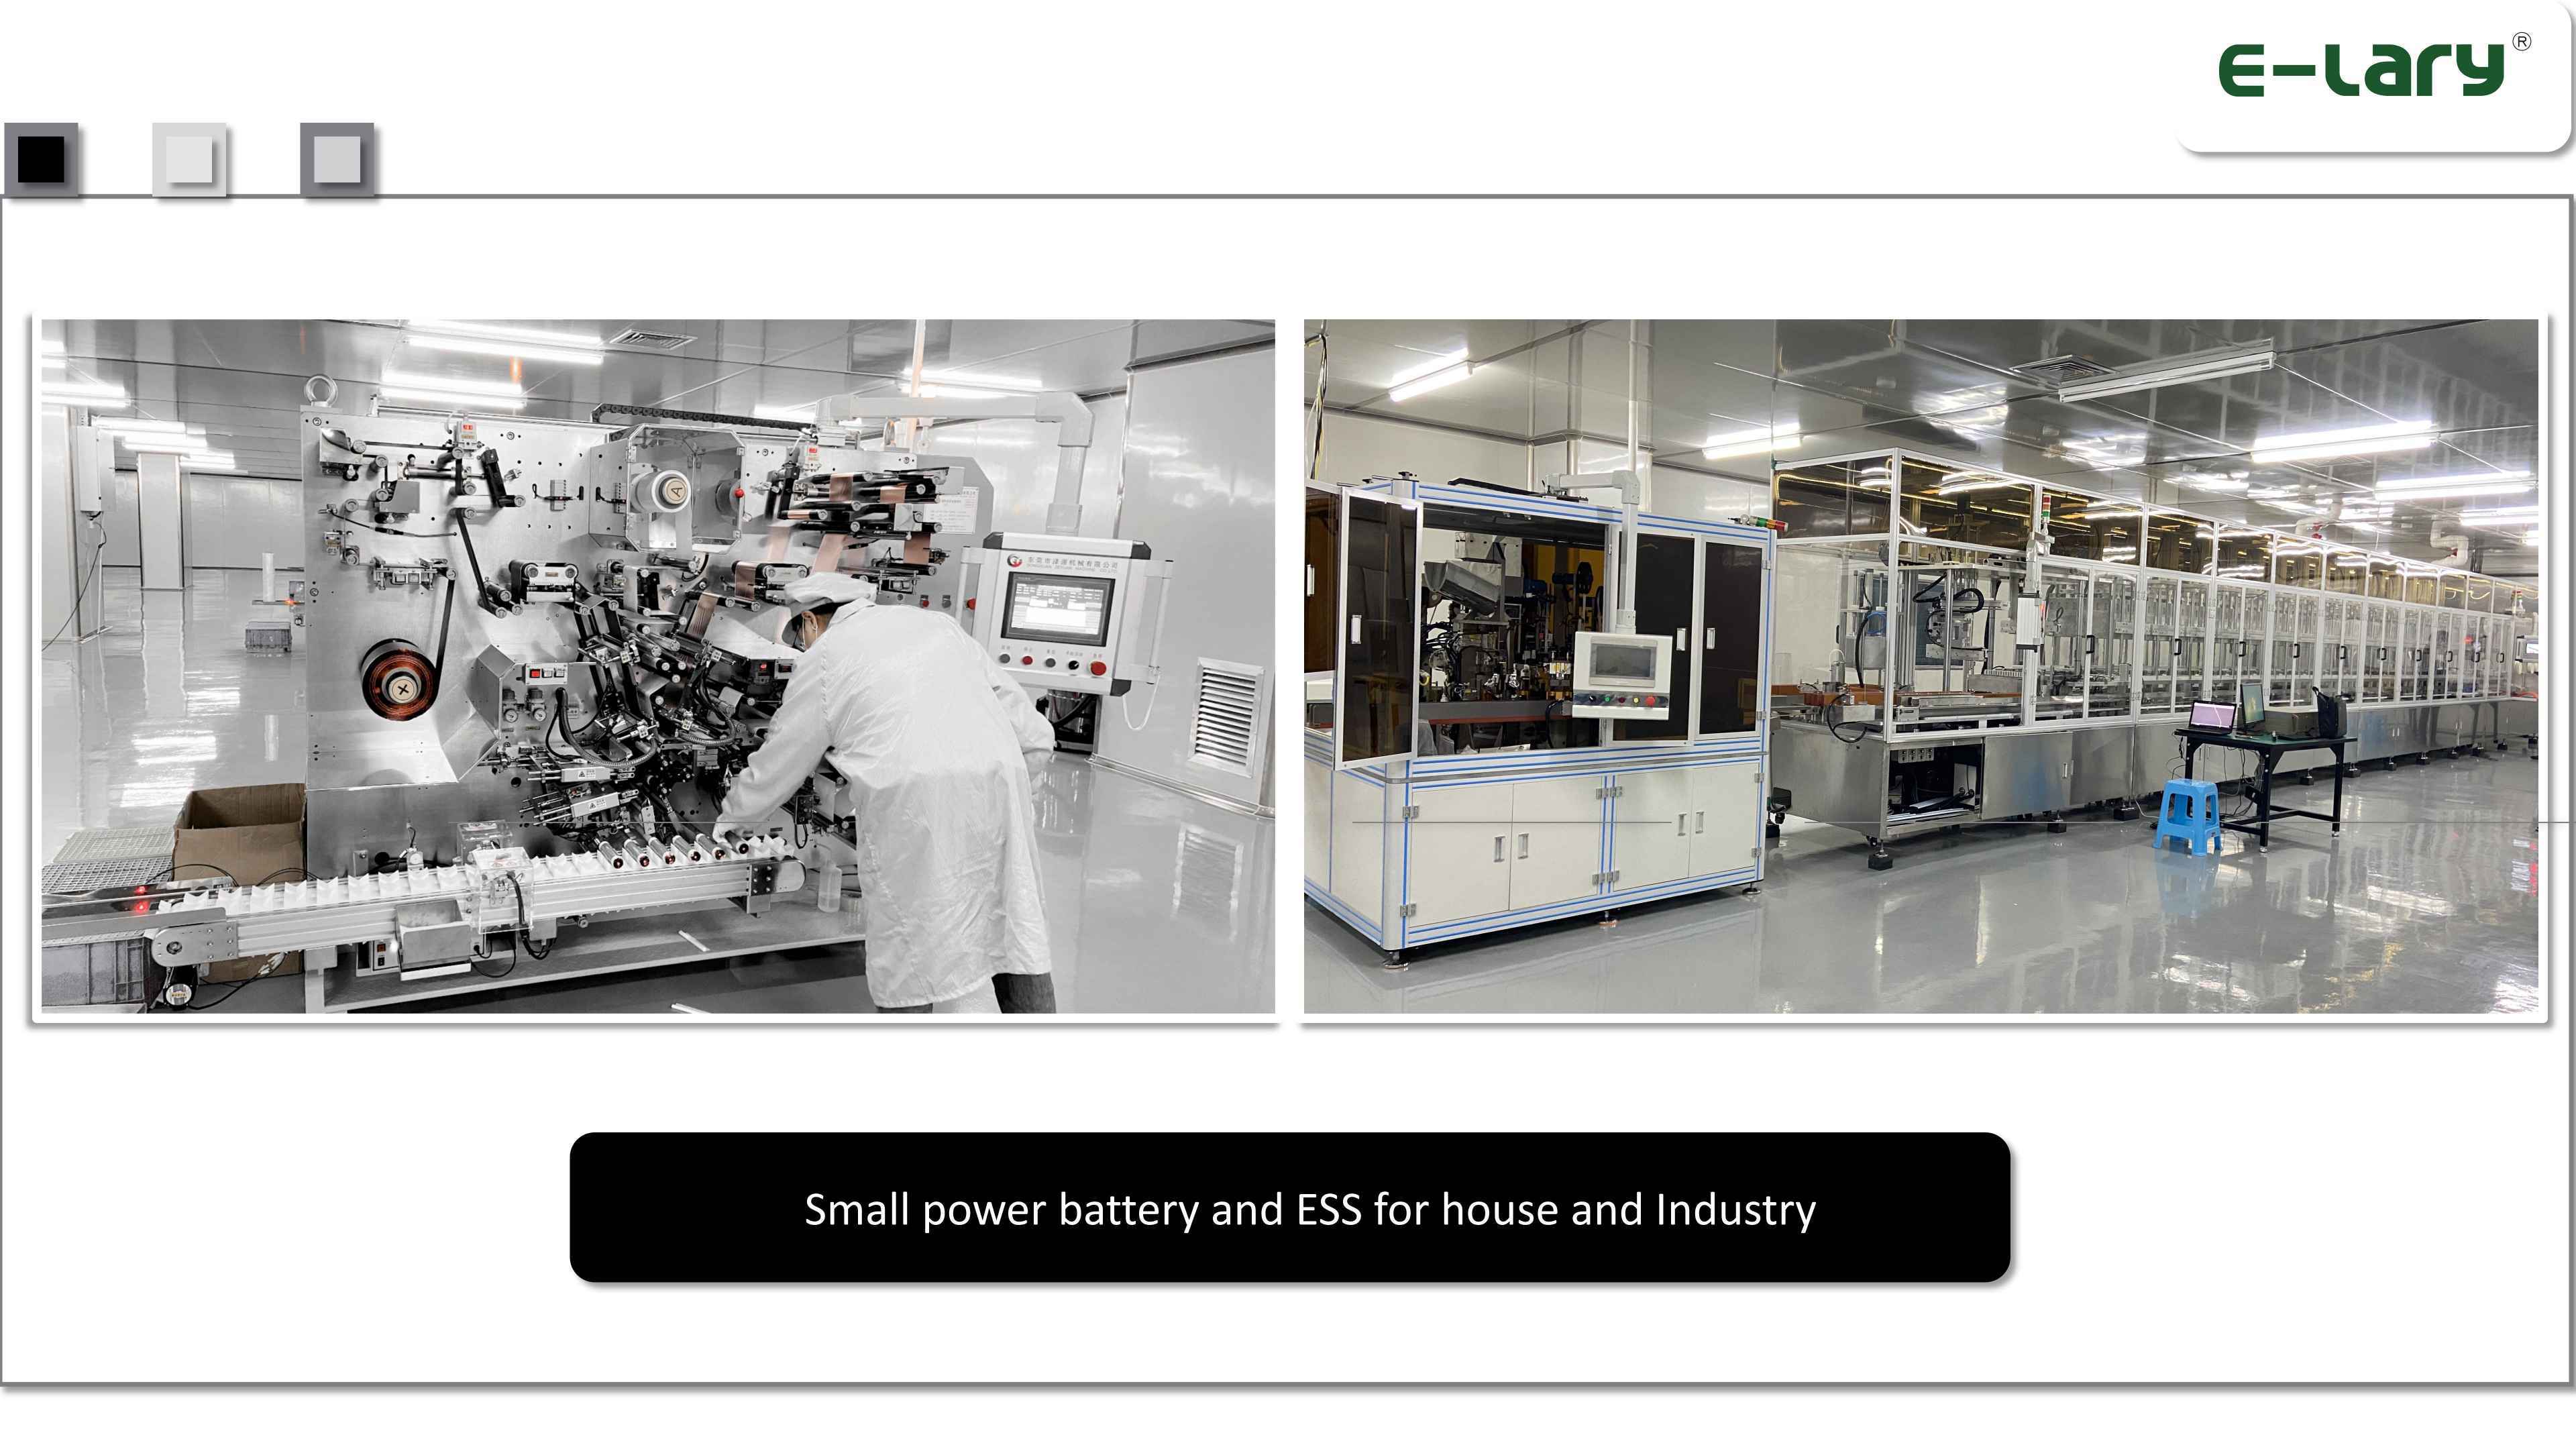 Perfil de la empresa E-lary de baterías de sodio para vehículos eléctricos